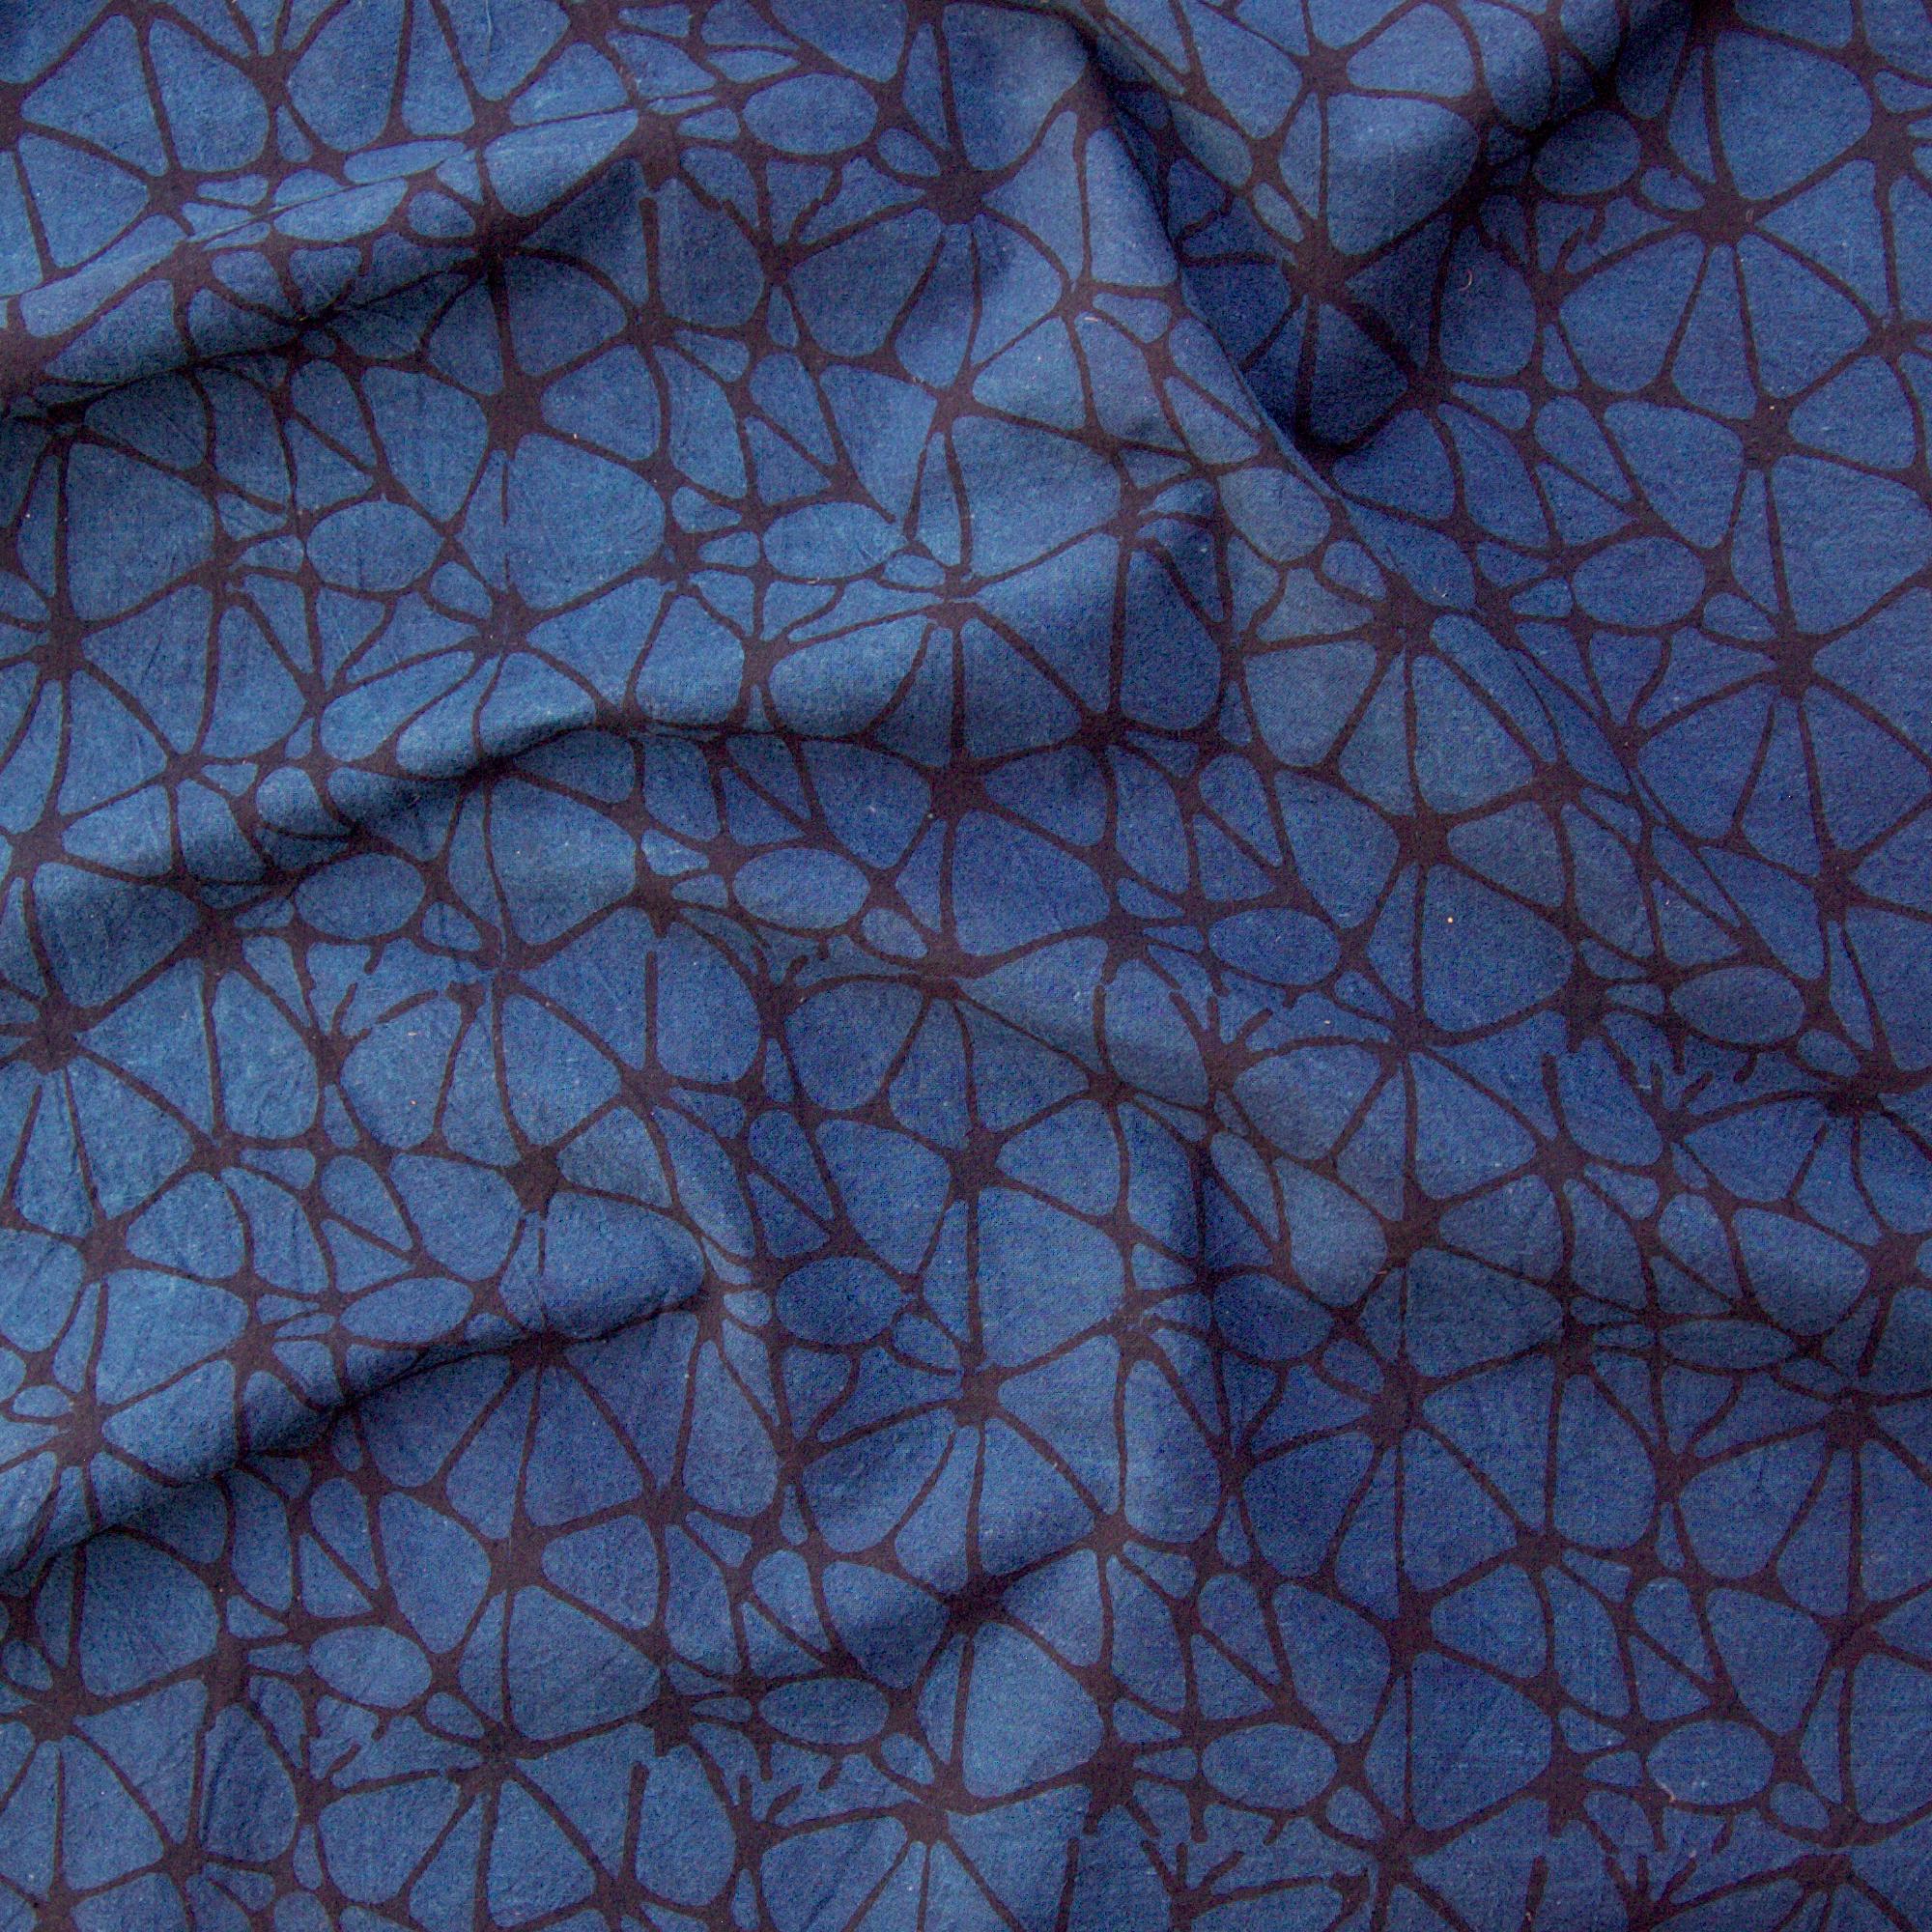 100% Block-Printed Cotton Fabric From India- Ajrak - Indigo Black Constellation Print - Contrast